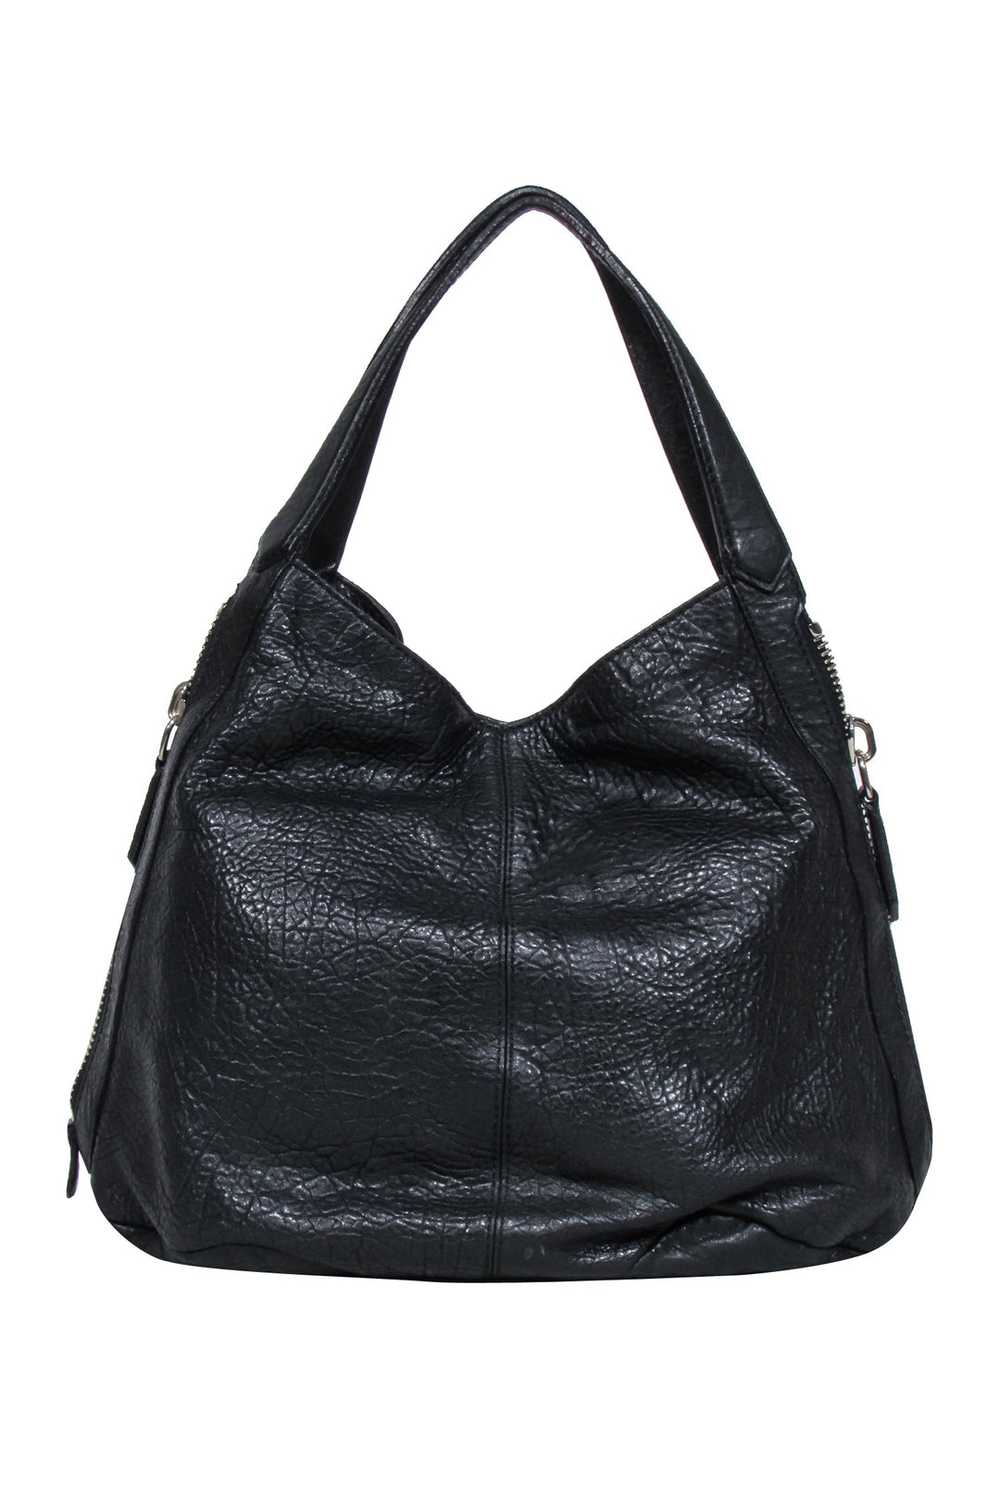 Givenchy - Black Leather Hobo Bag - image 3